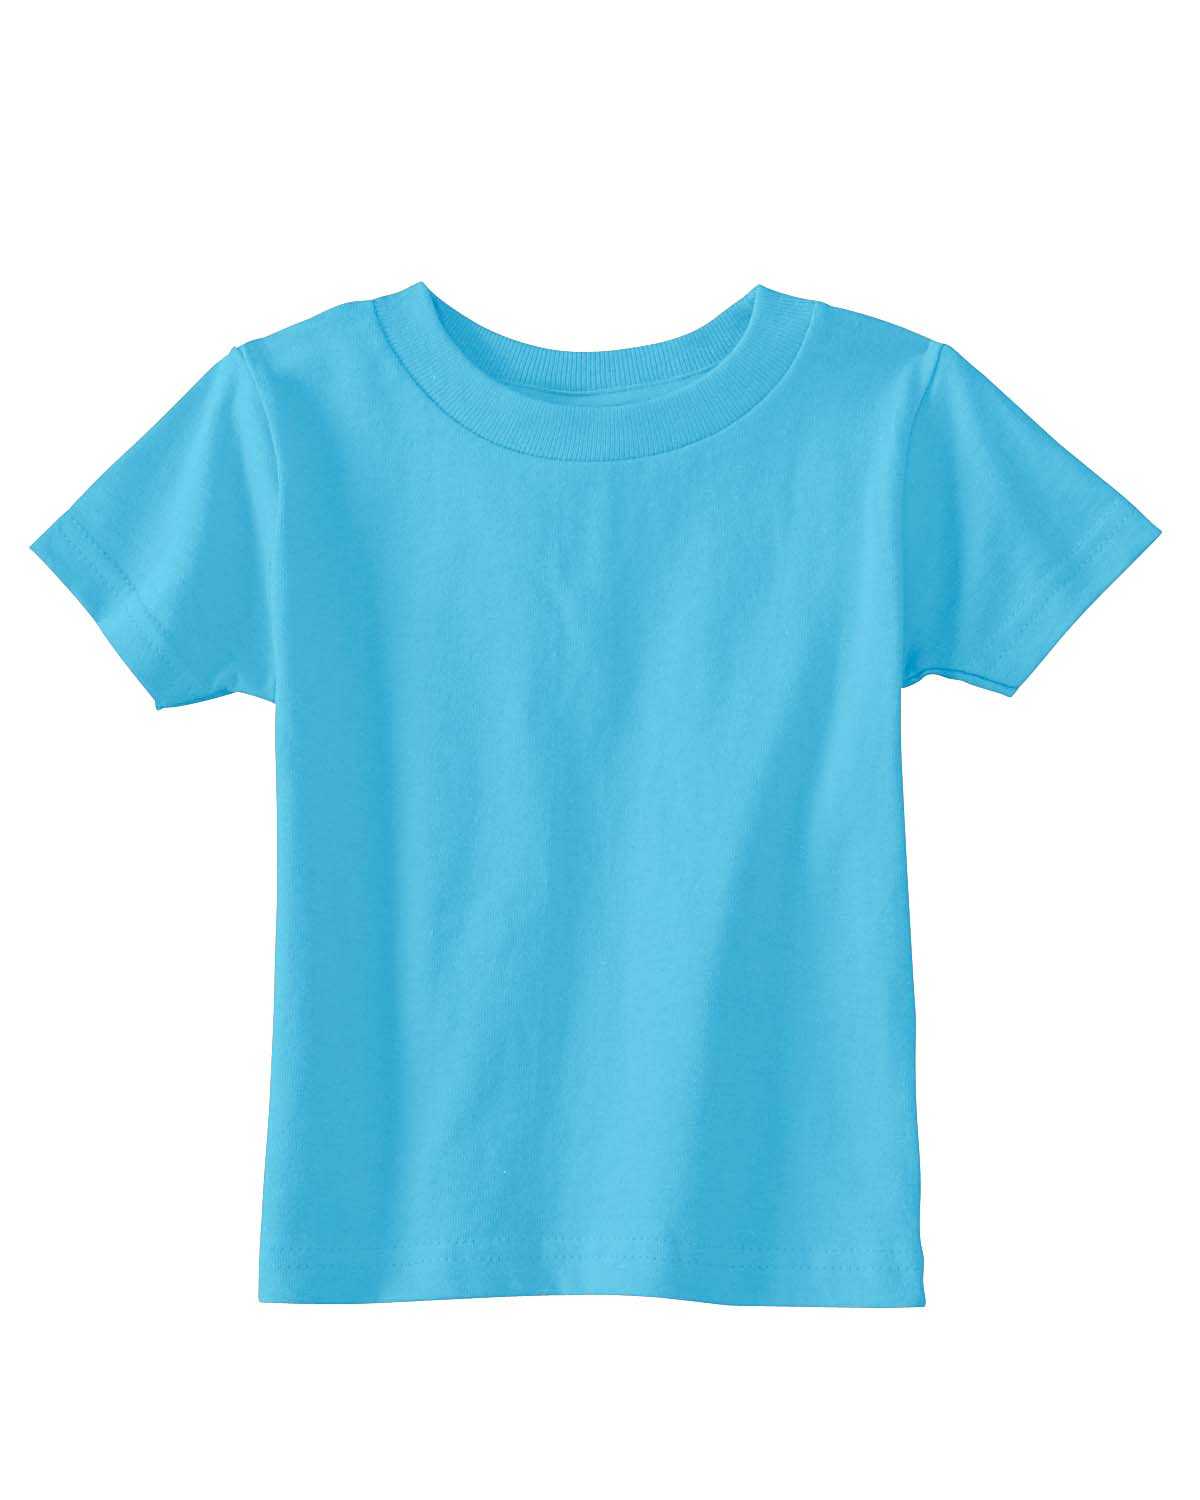 Rabbit Skins 3401 Infant Cotton Jersey T-Shirt | ApparelChoice.com